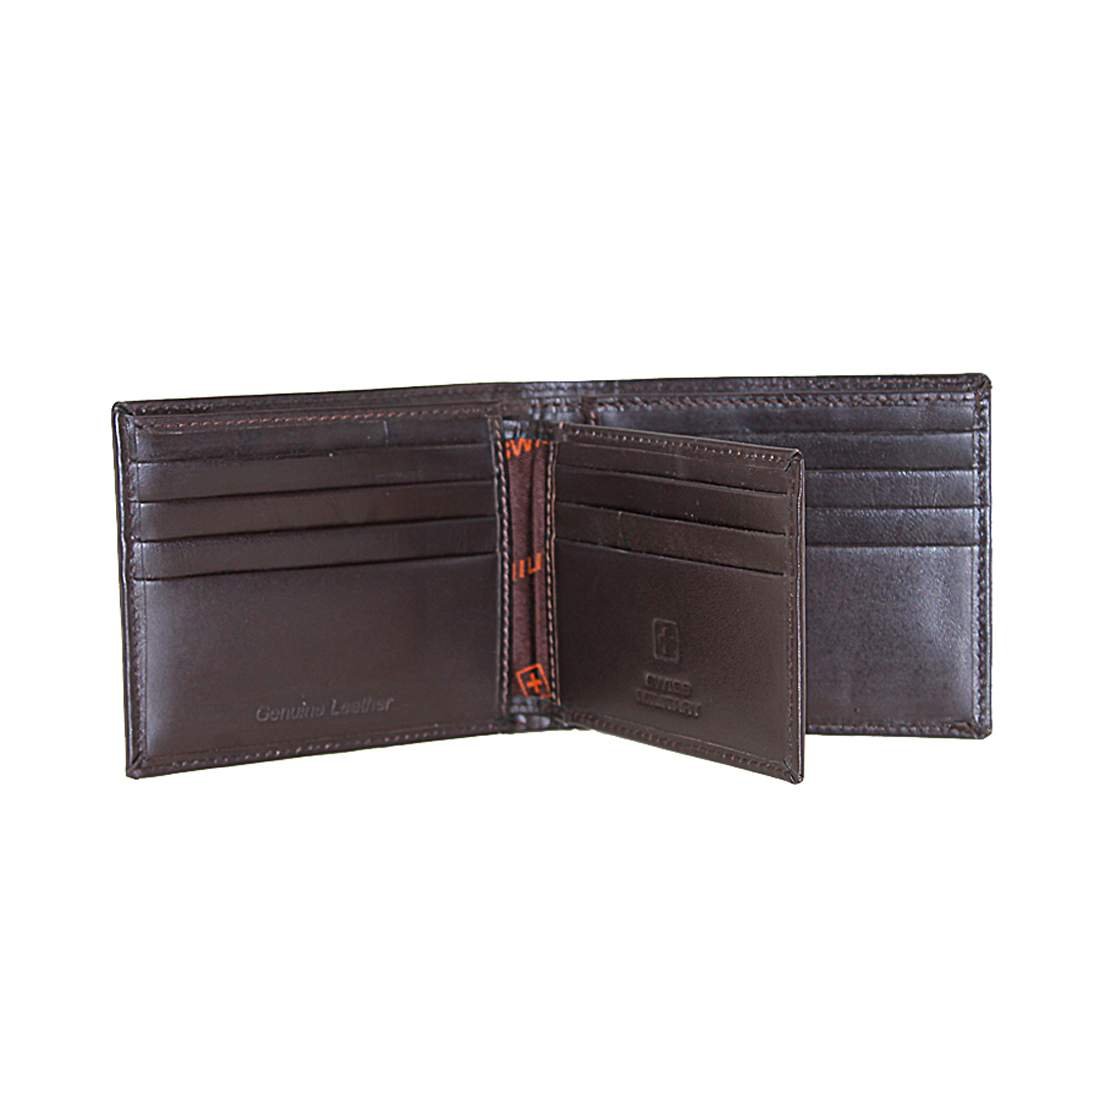 Swiss Army Leather Trifold Wallet & Utility Clip Set, Black | eBay